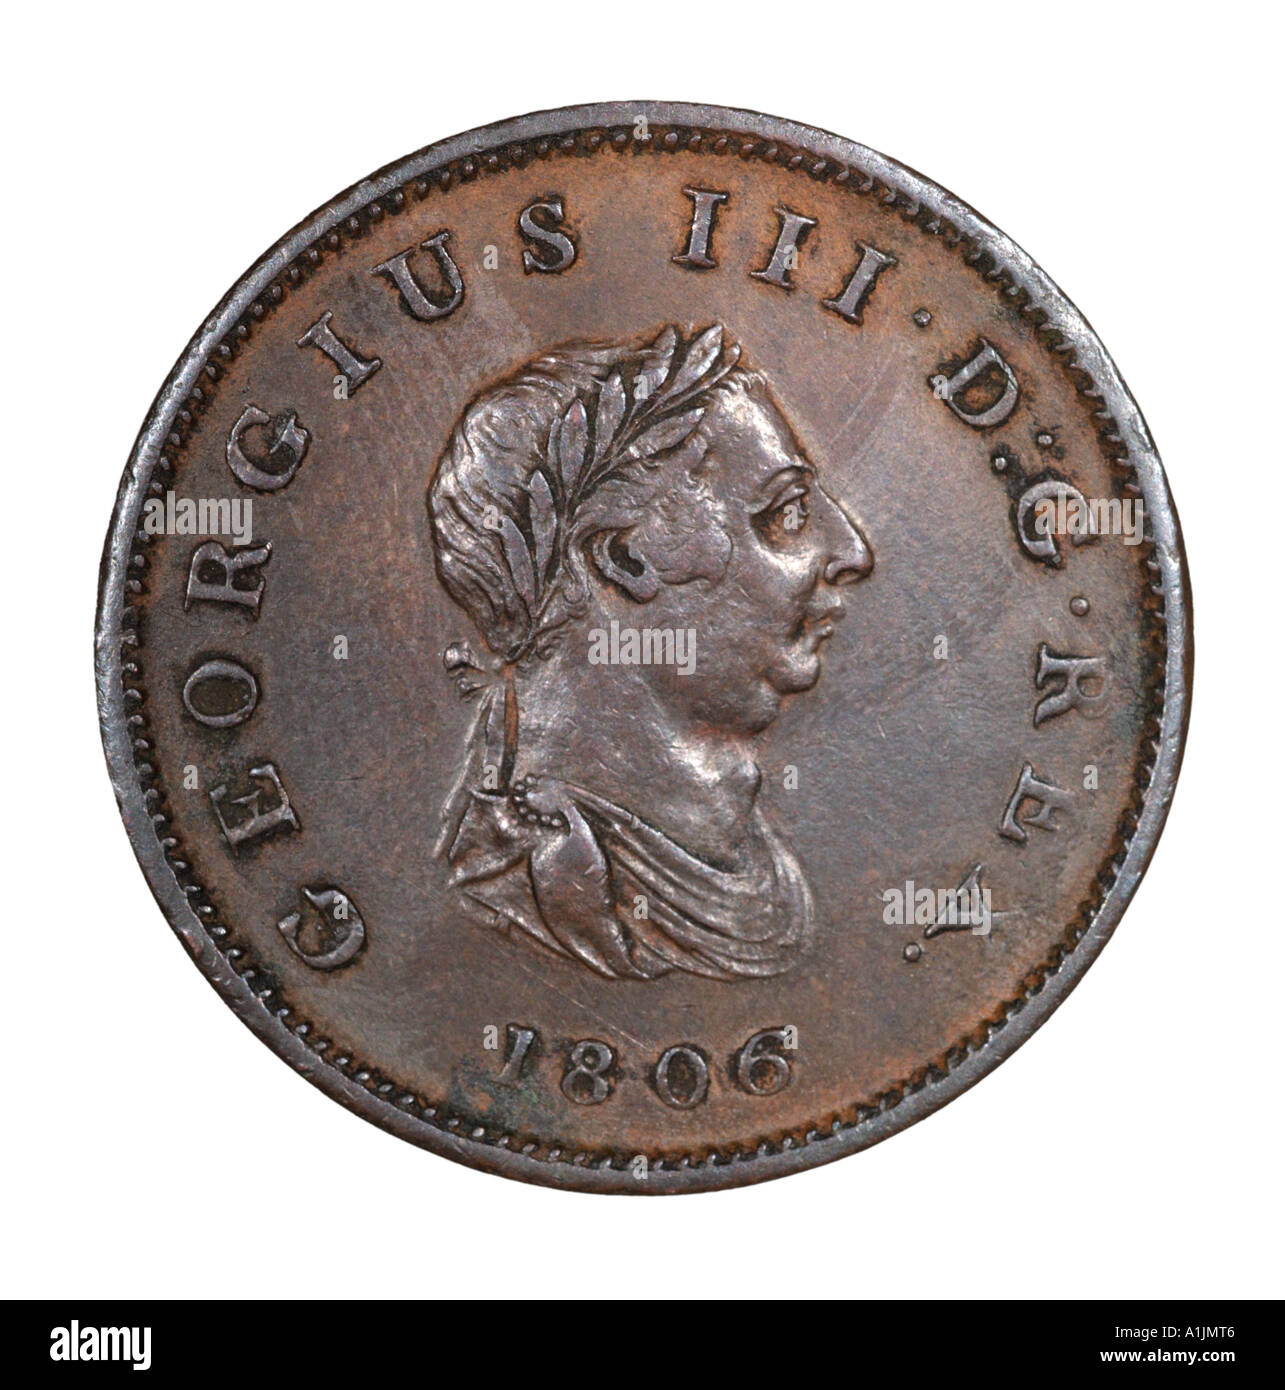 King George III 3 Reg fid def pre decimal half penny old pence P 1806 copper bright head right laurel leaf Stock Photo